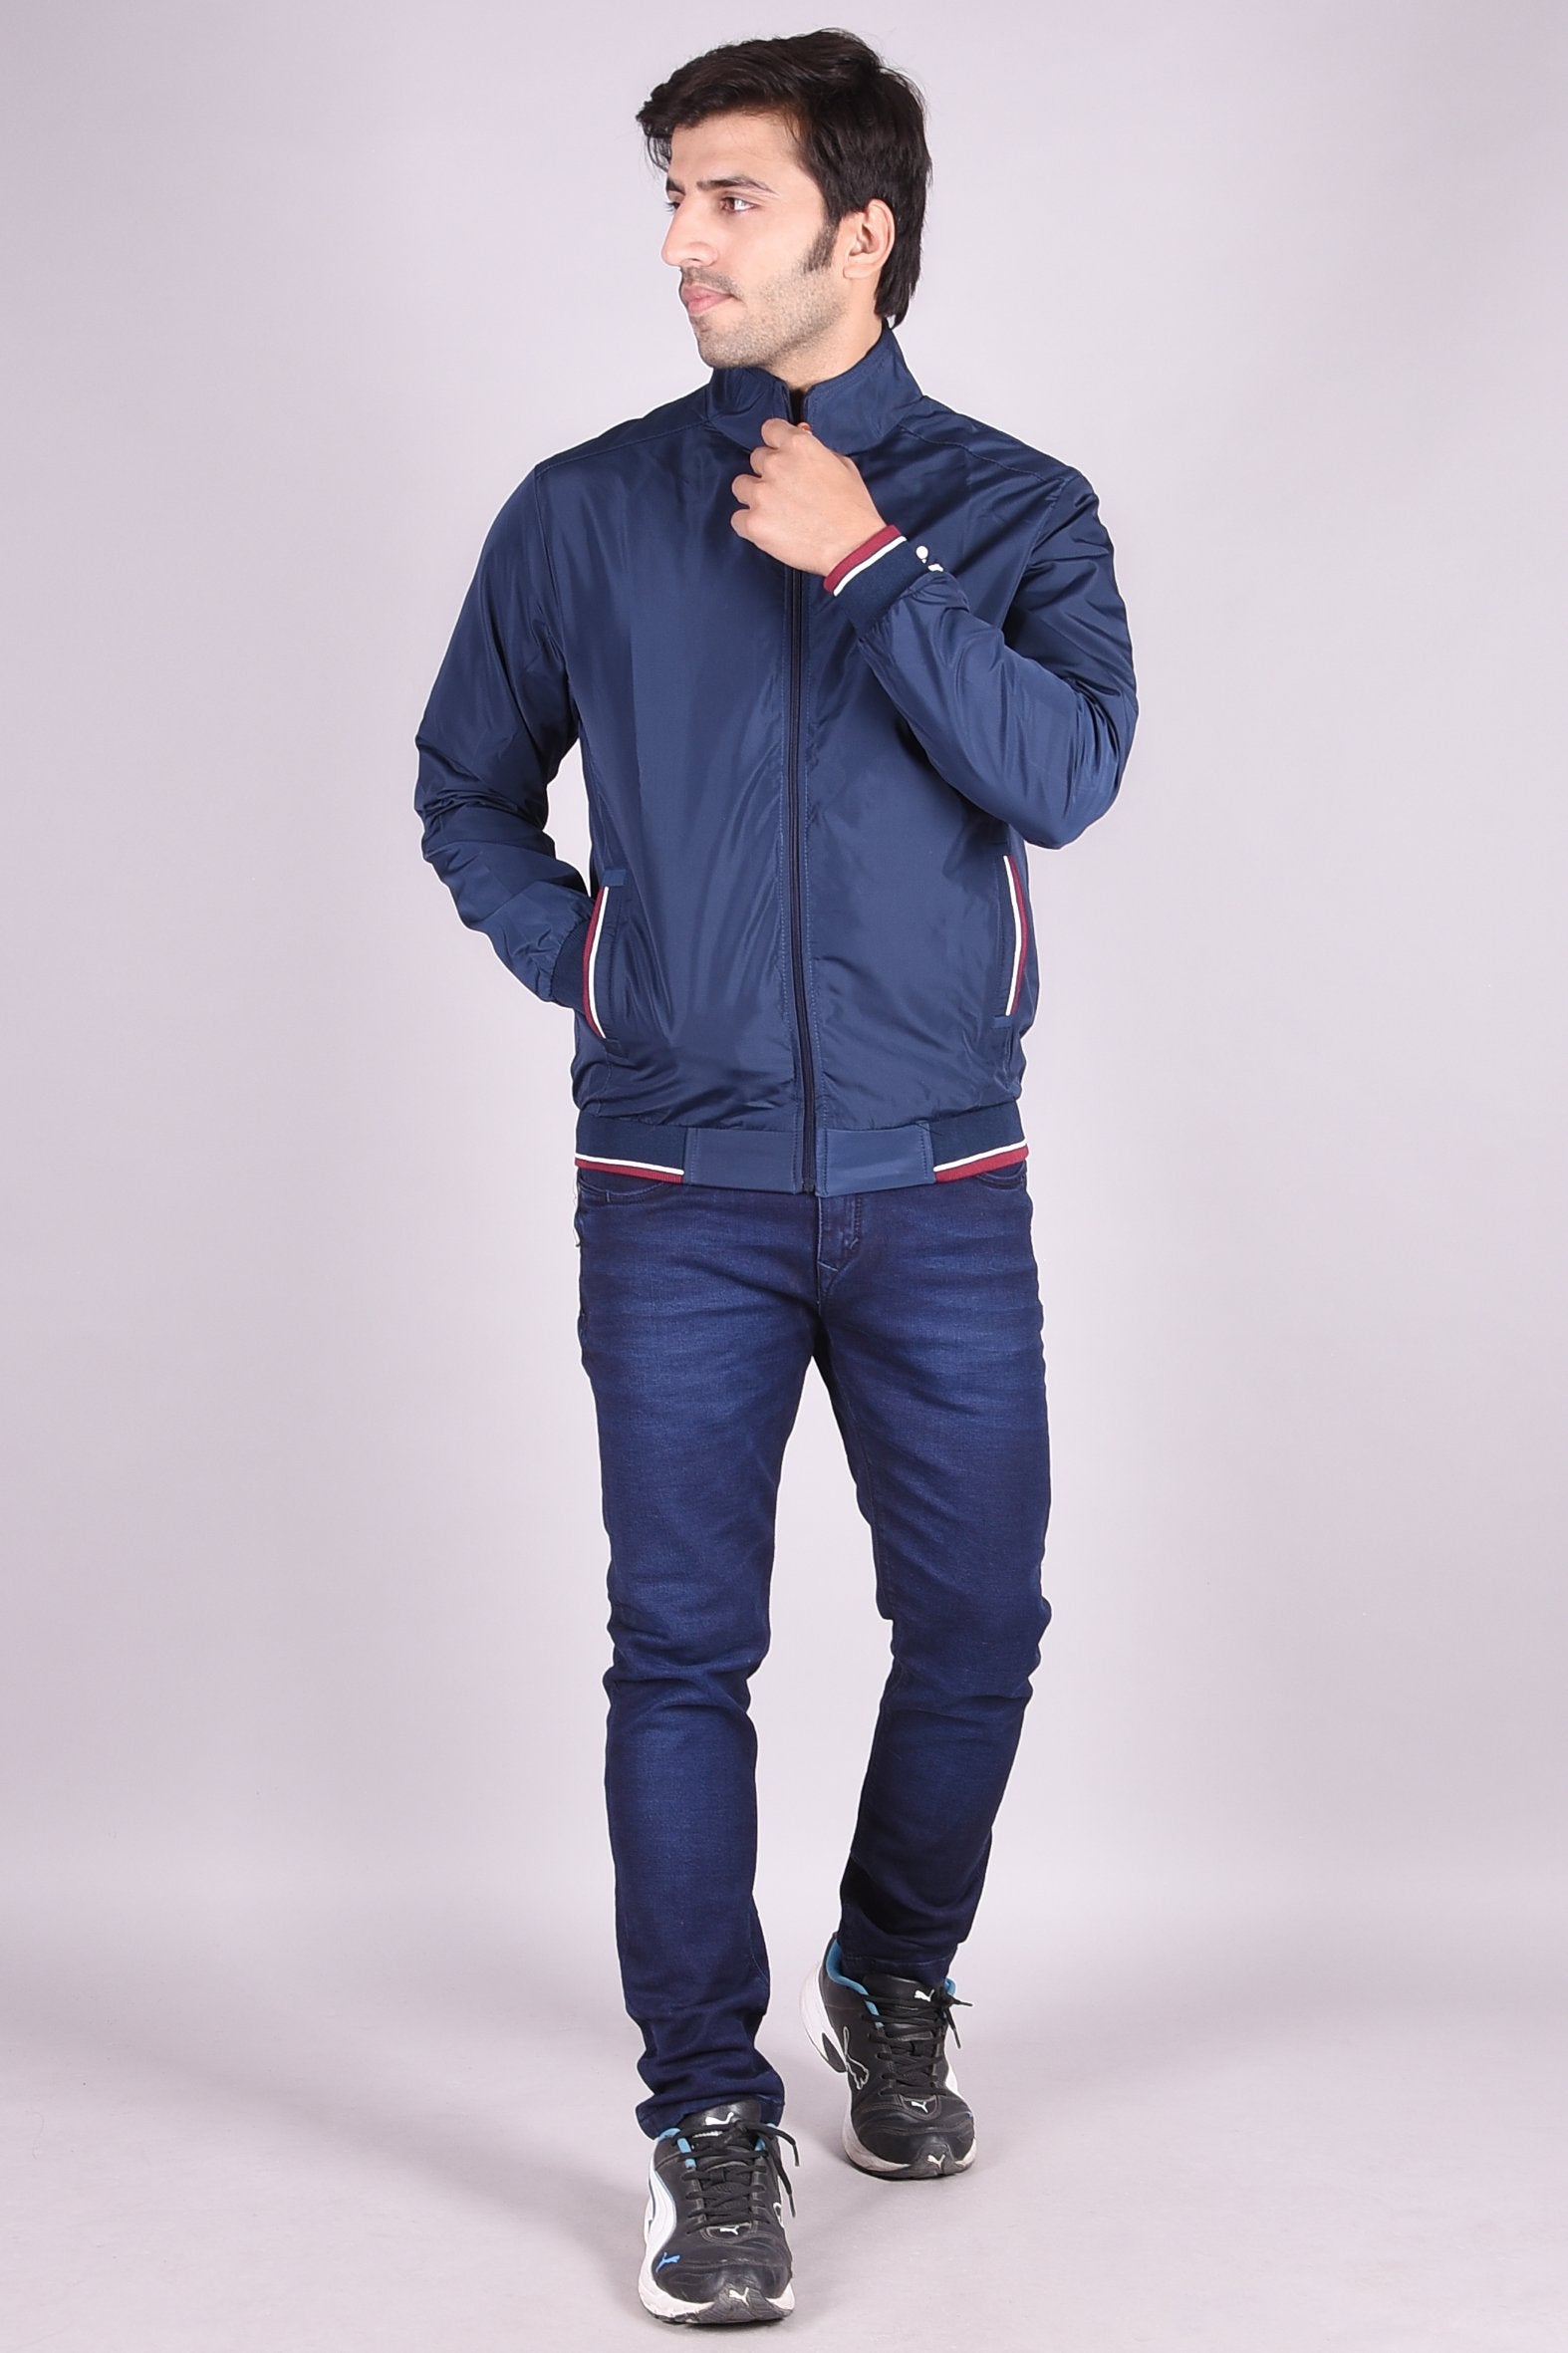 JAGURO Men's Polyester Blue Solid Stylish Sporty Jacket